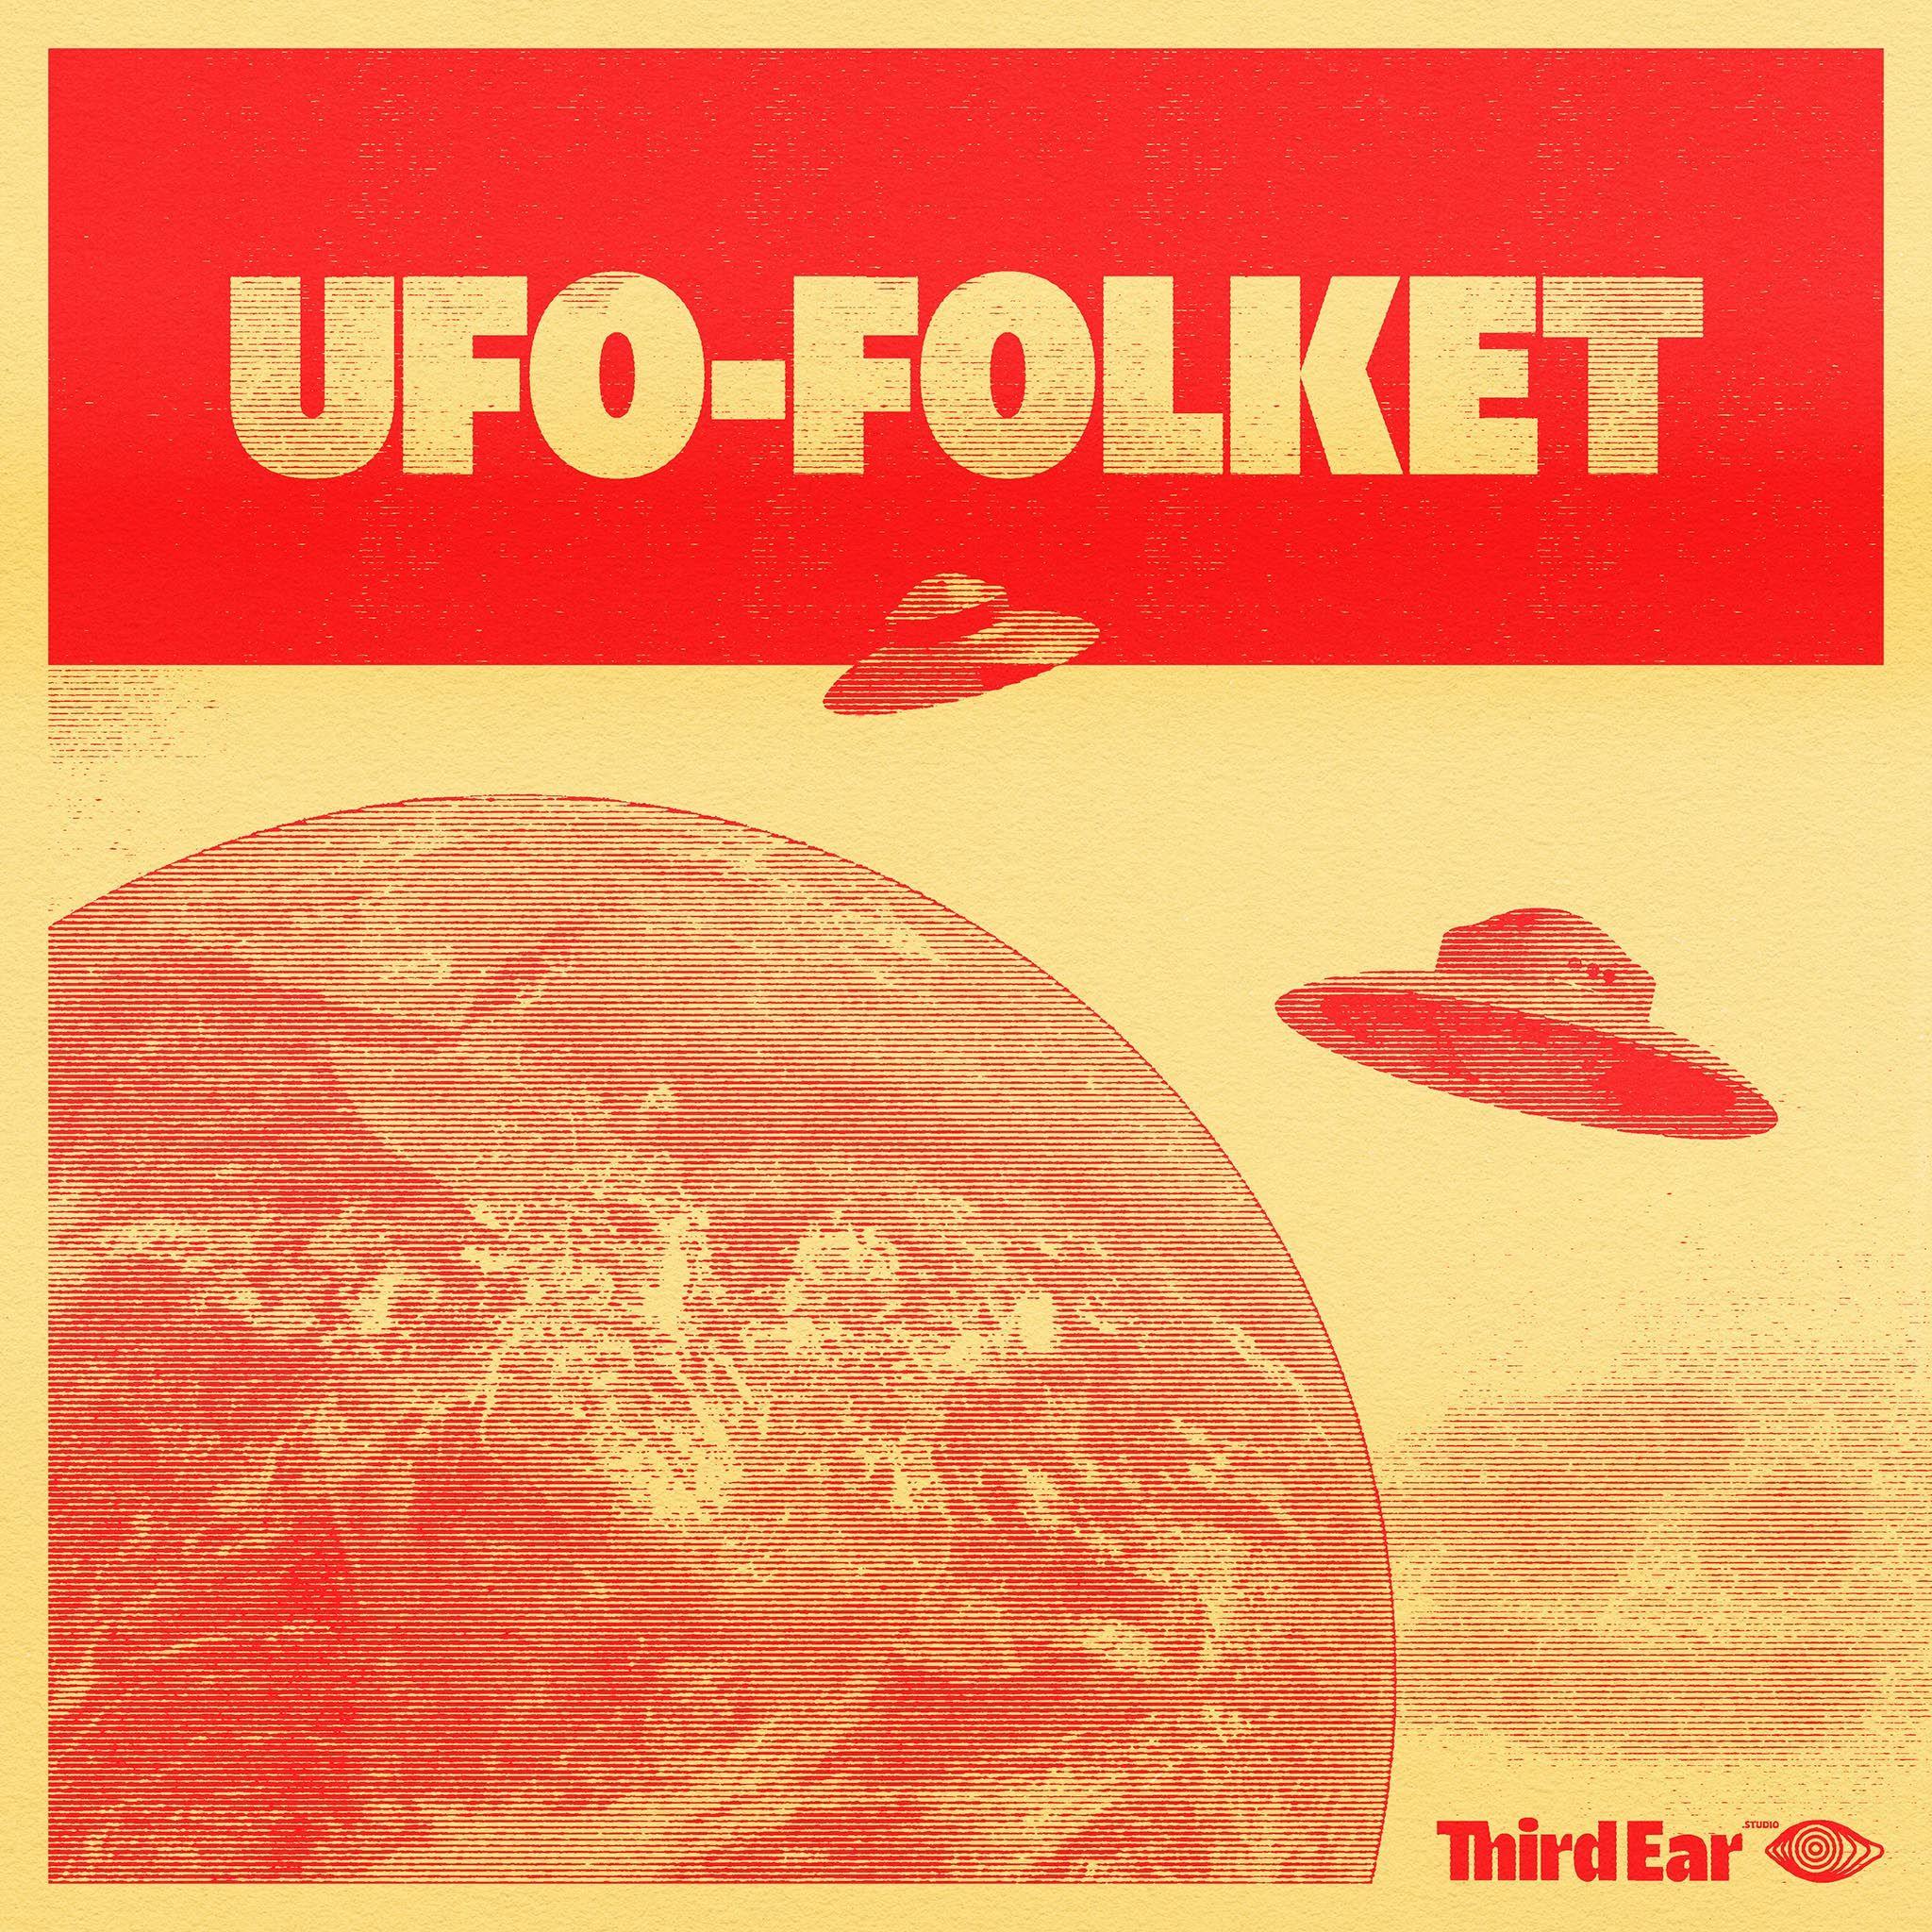 UFO-Folket